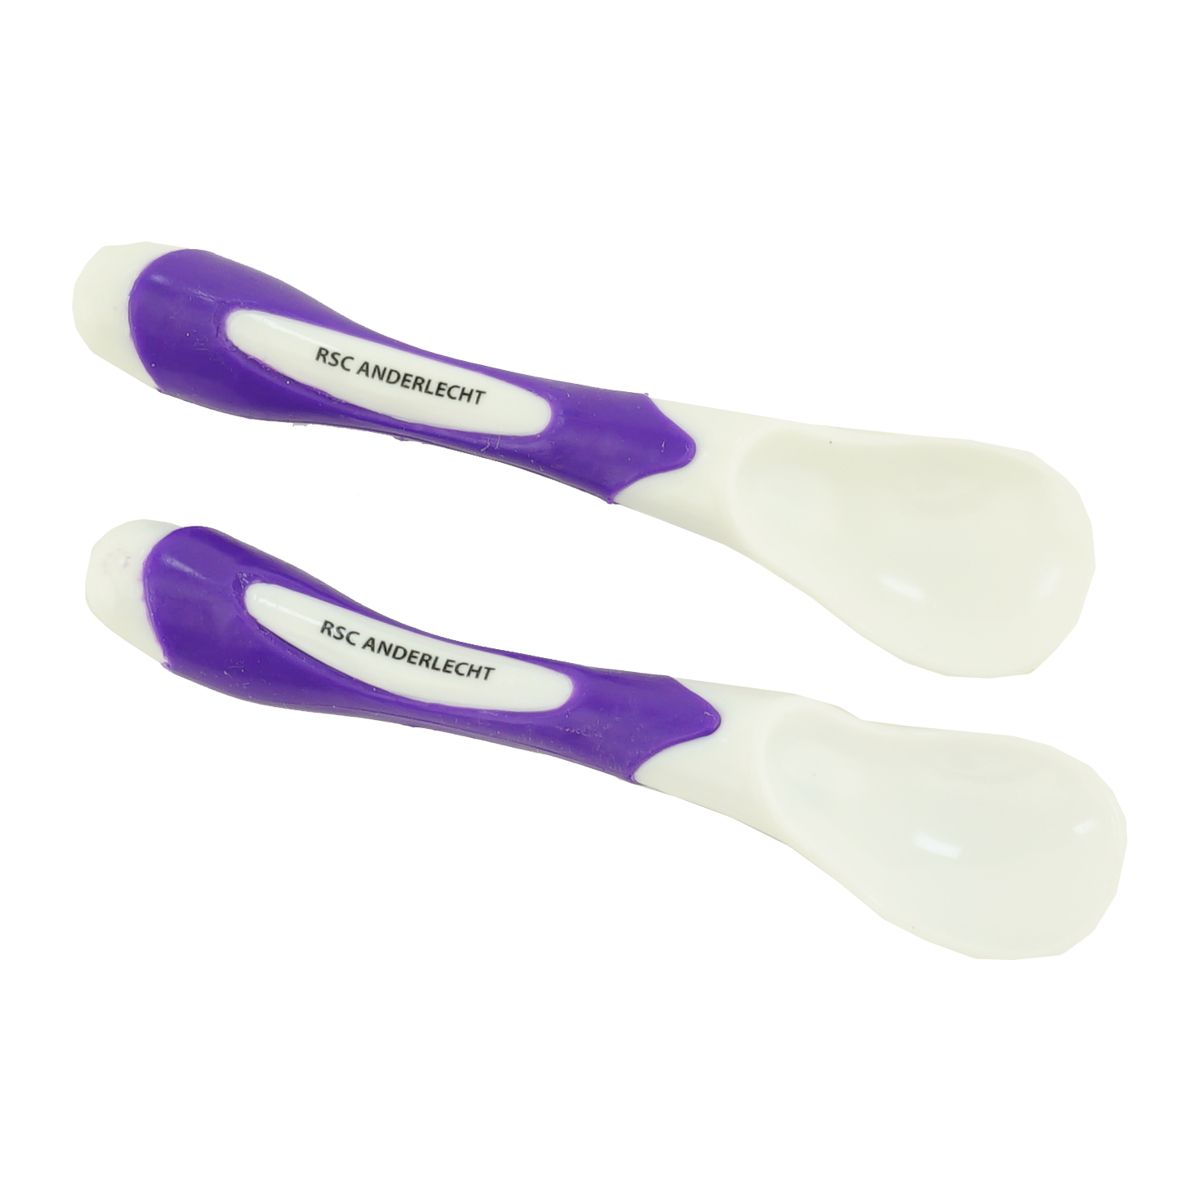 RSCA Baby Spoons Set